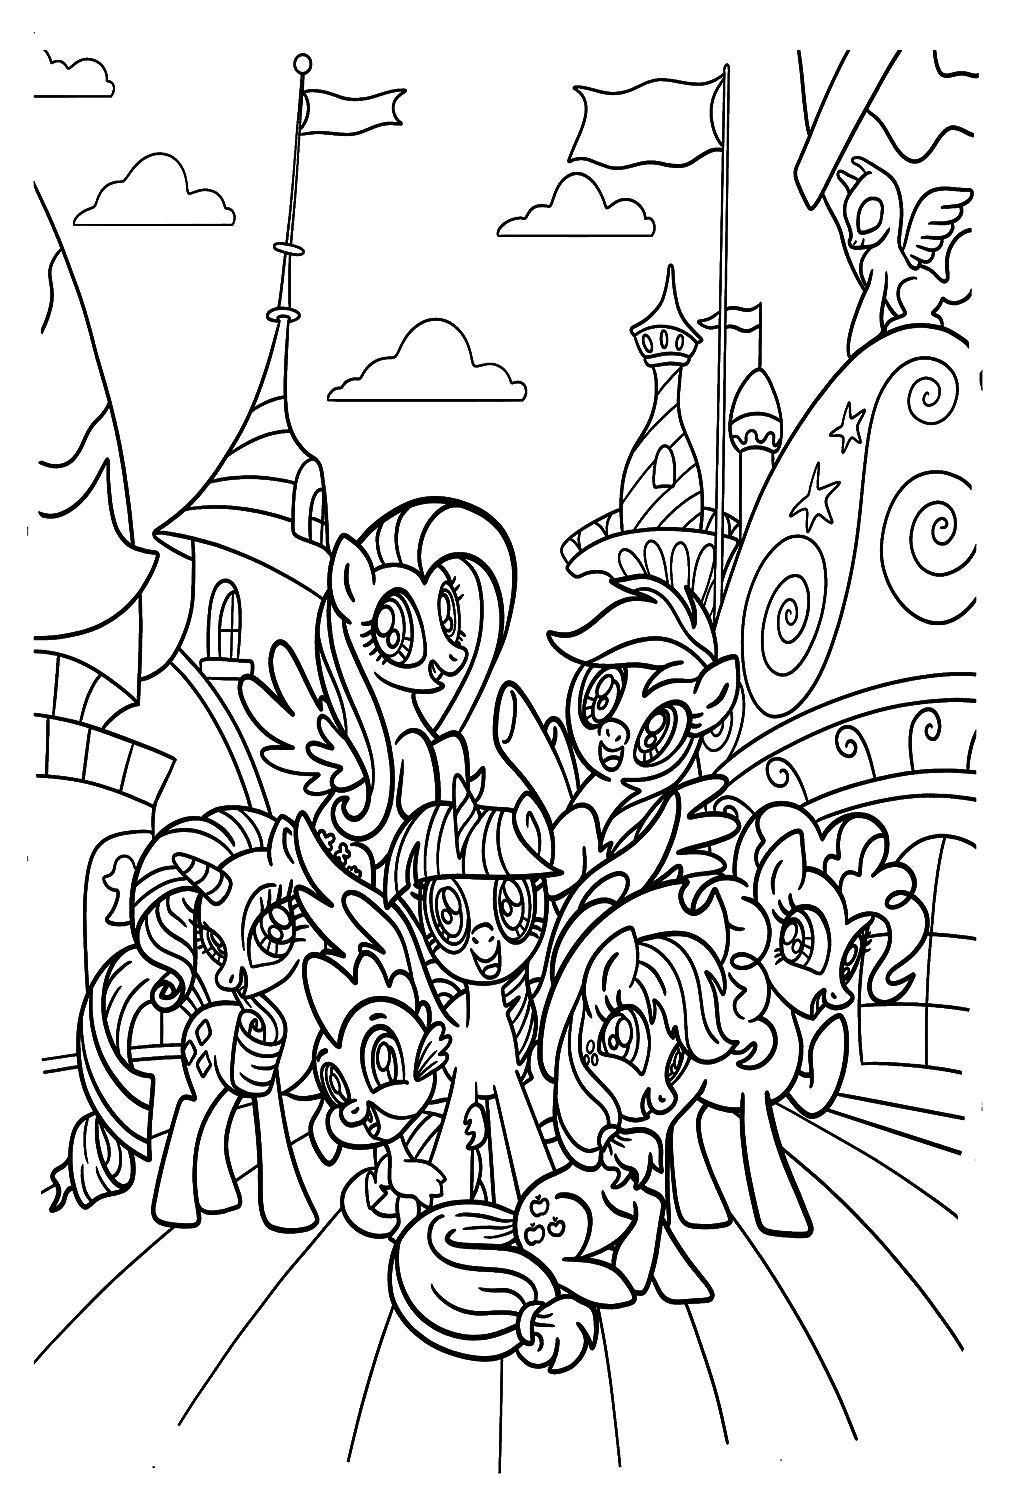 Dibujos para colorear de My Little Pony de Twilight Sparkle de Twilight Sparkle